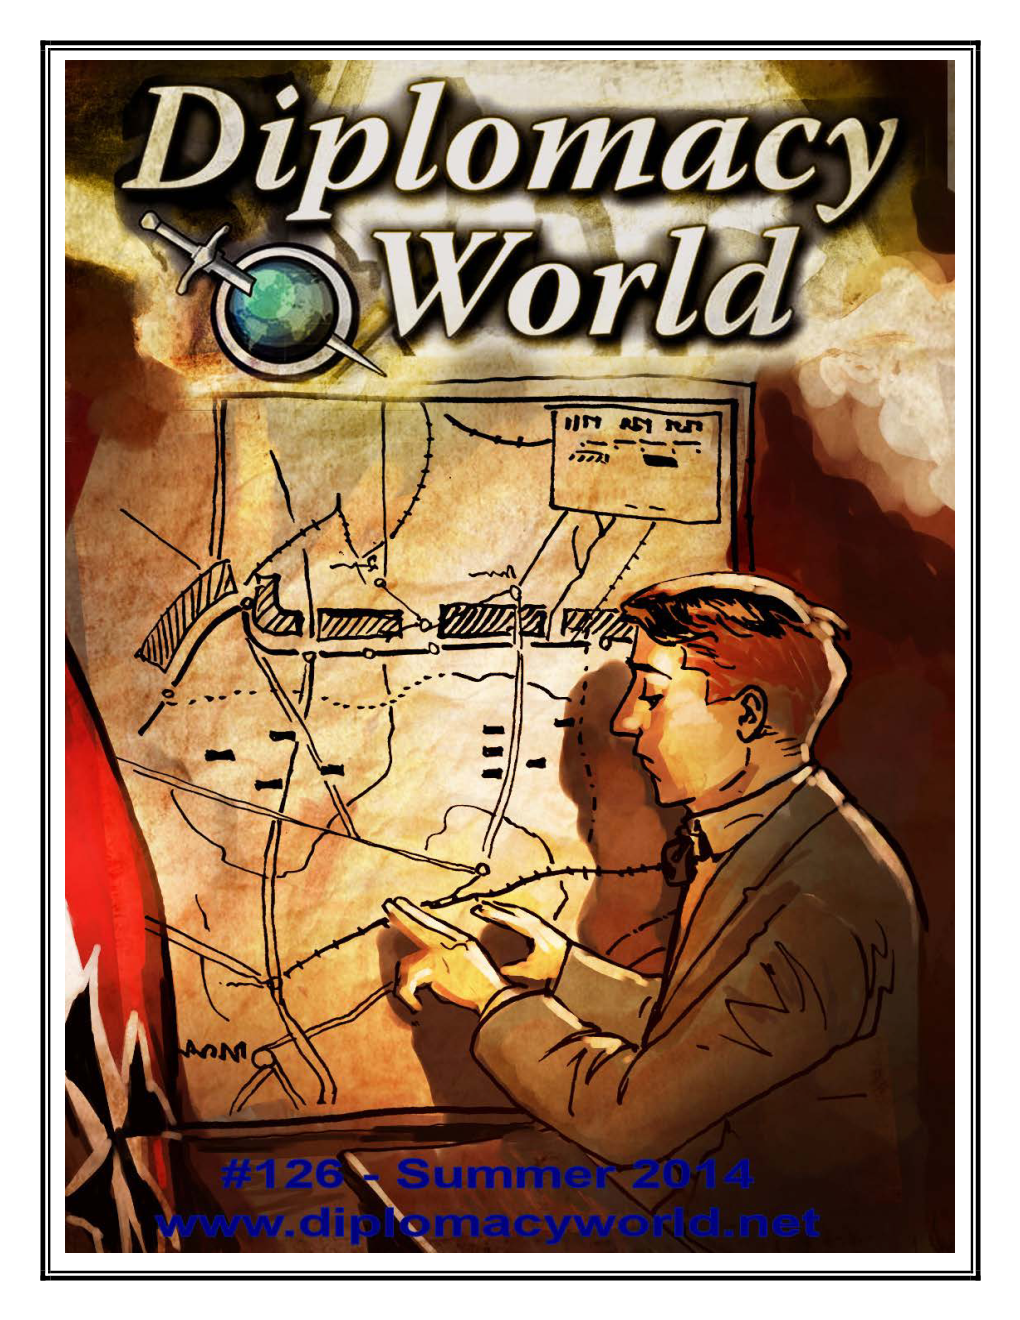 Diplomacy World #126, Summer 2014 Issue